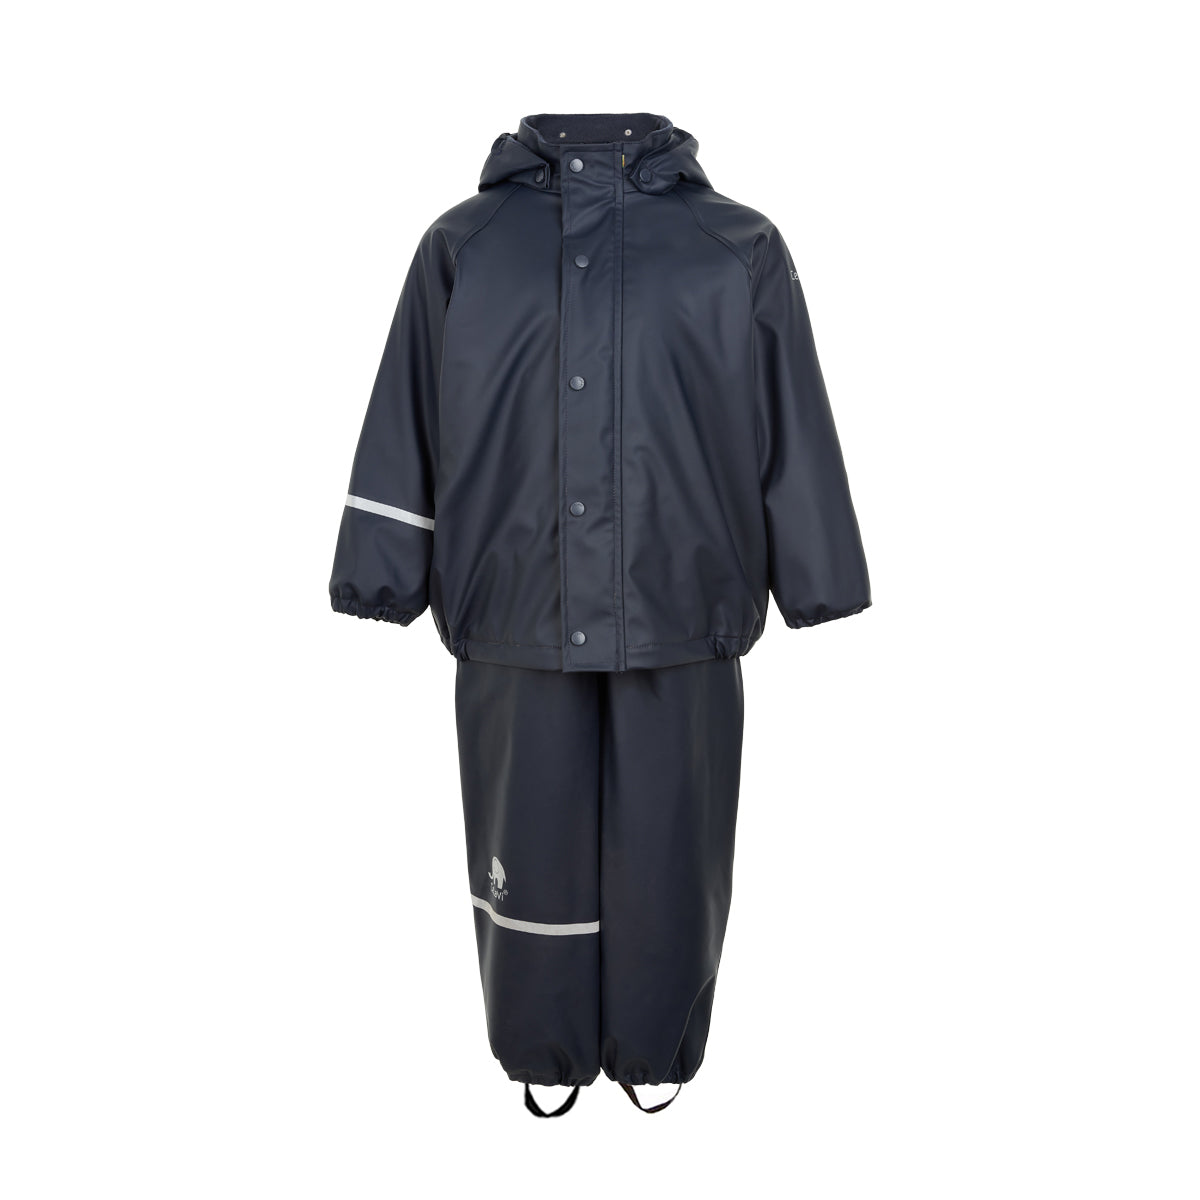 Children's Waterproof Trousers and Jacket Set | PuddleDucks